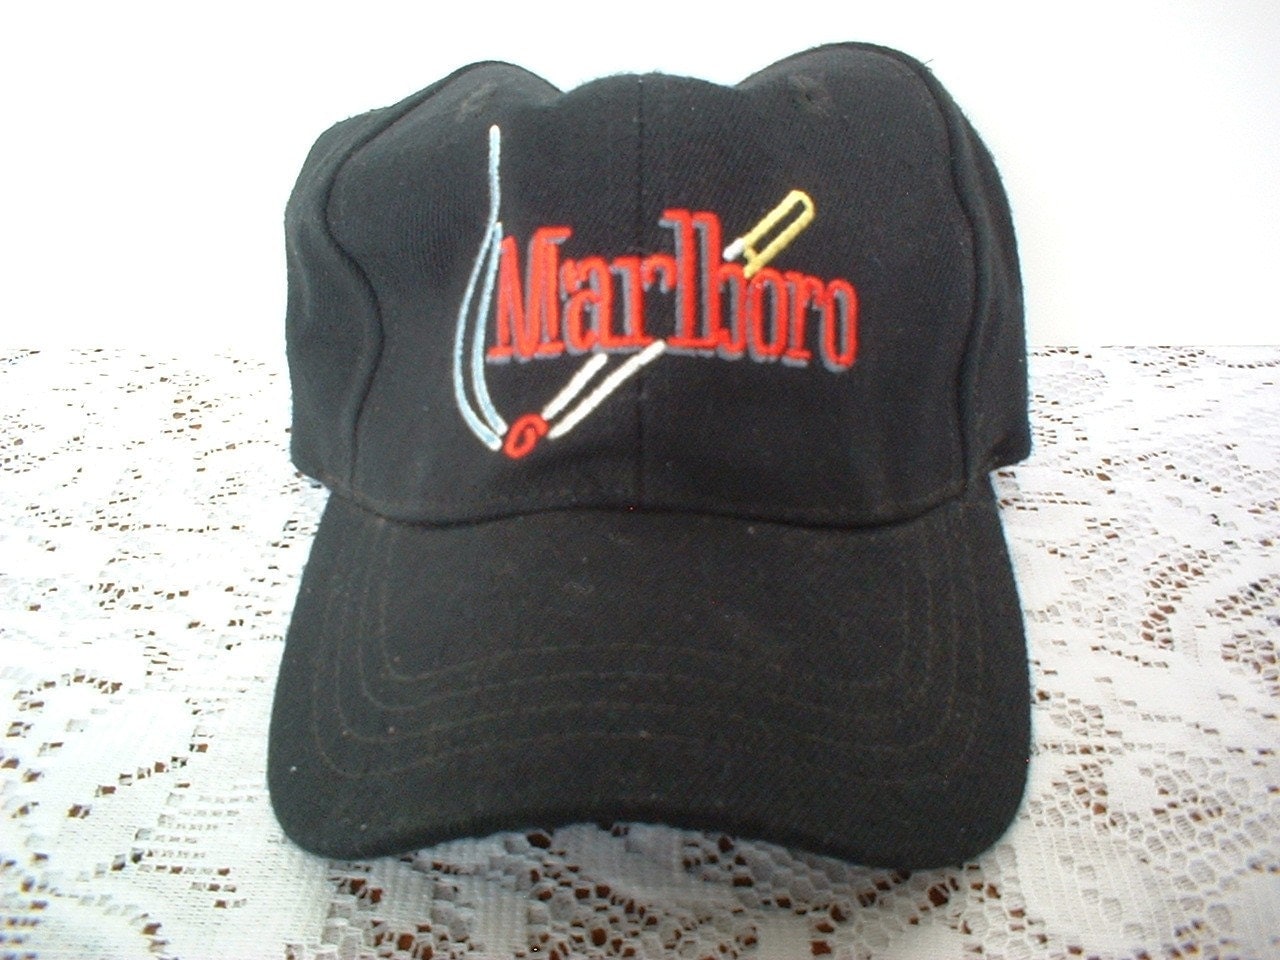 marlboro hat